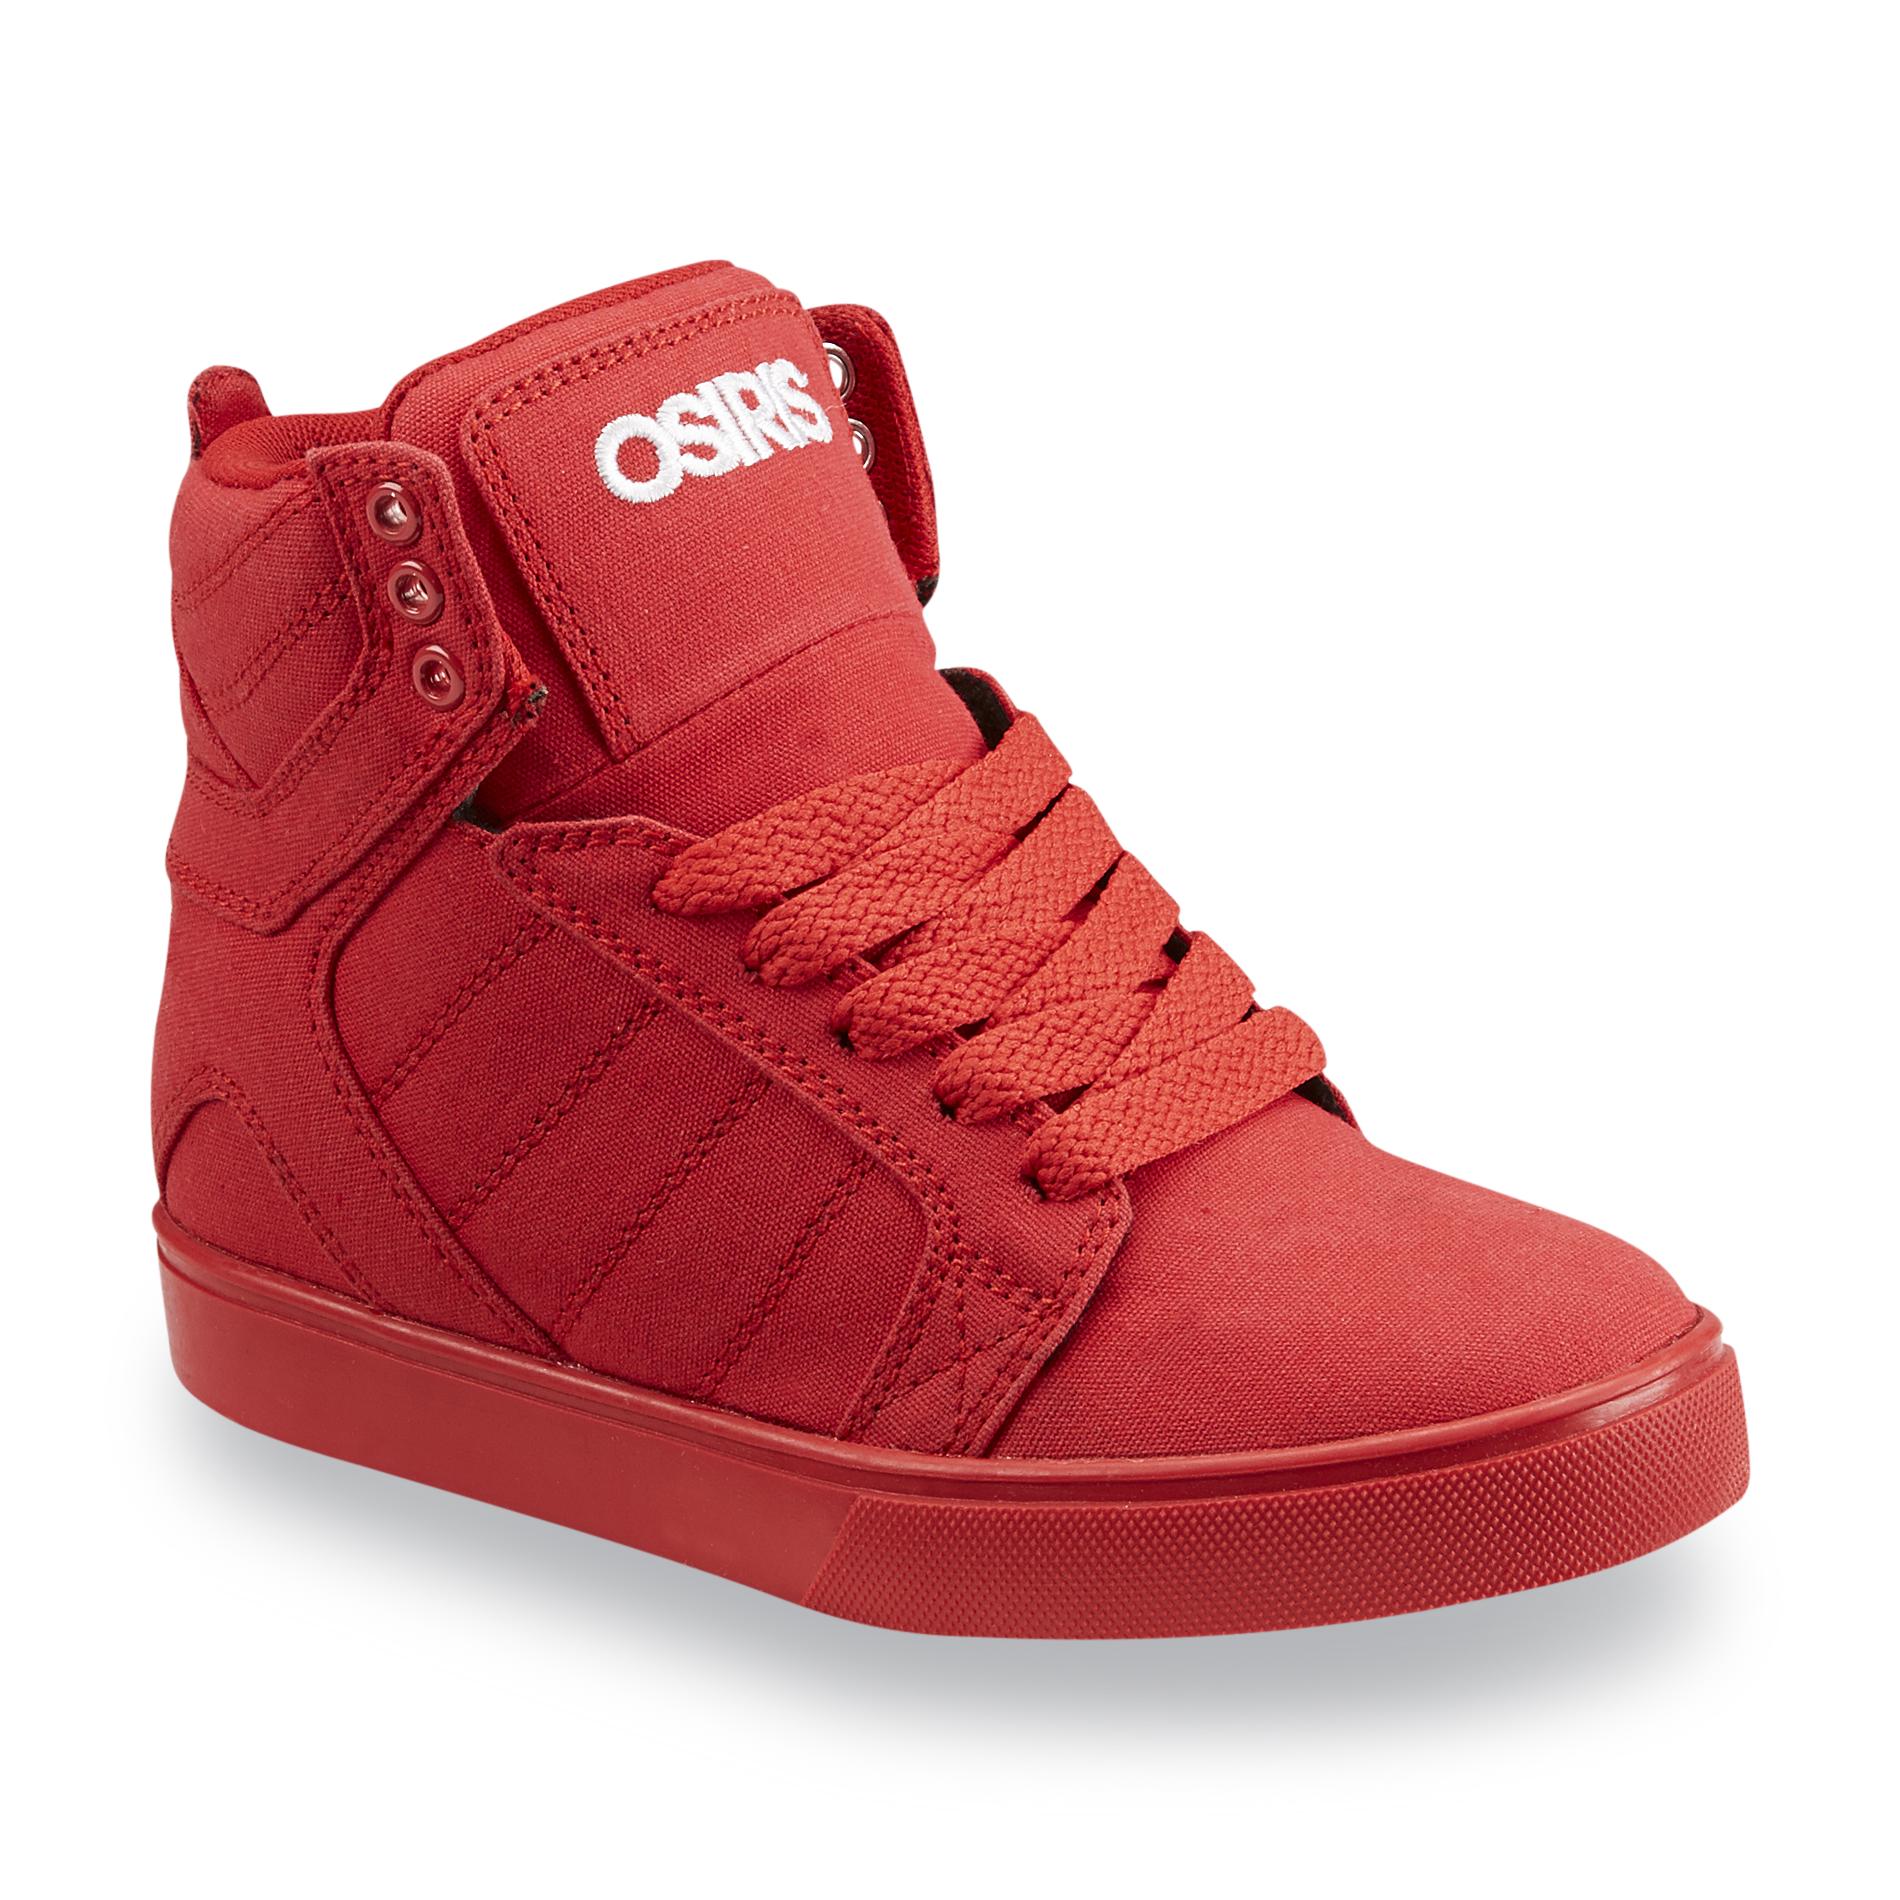 Osiris Boy's Cosmo Red HighTop Skate Shoe